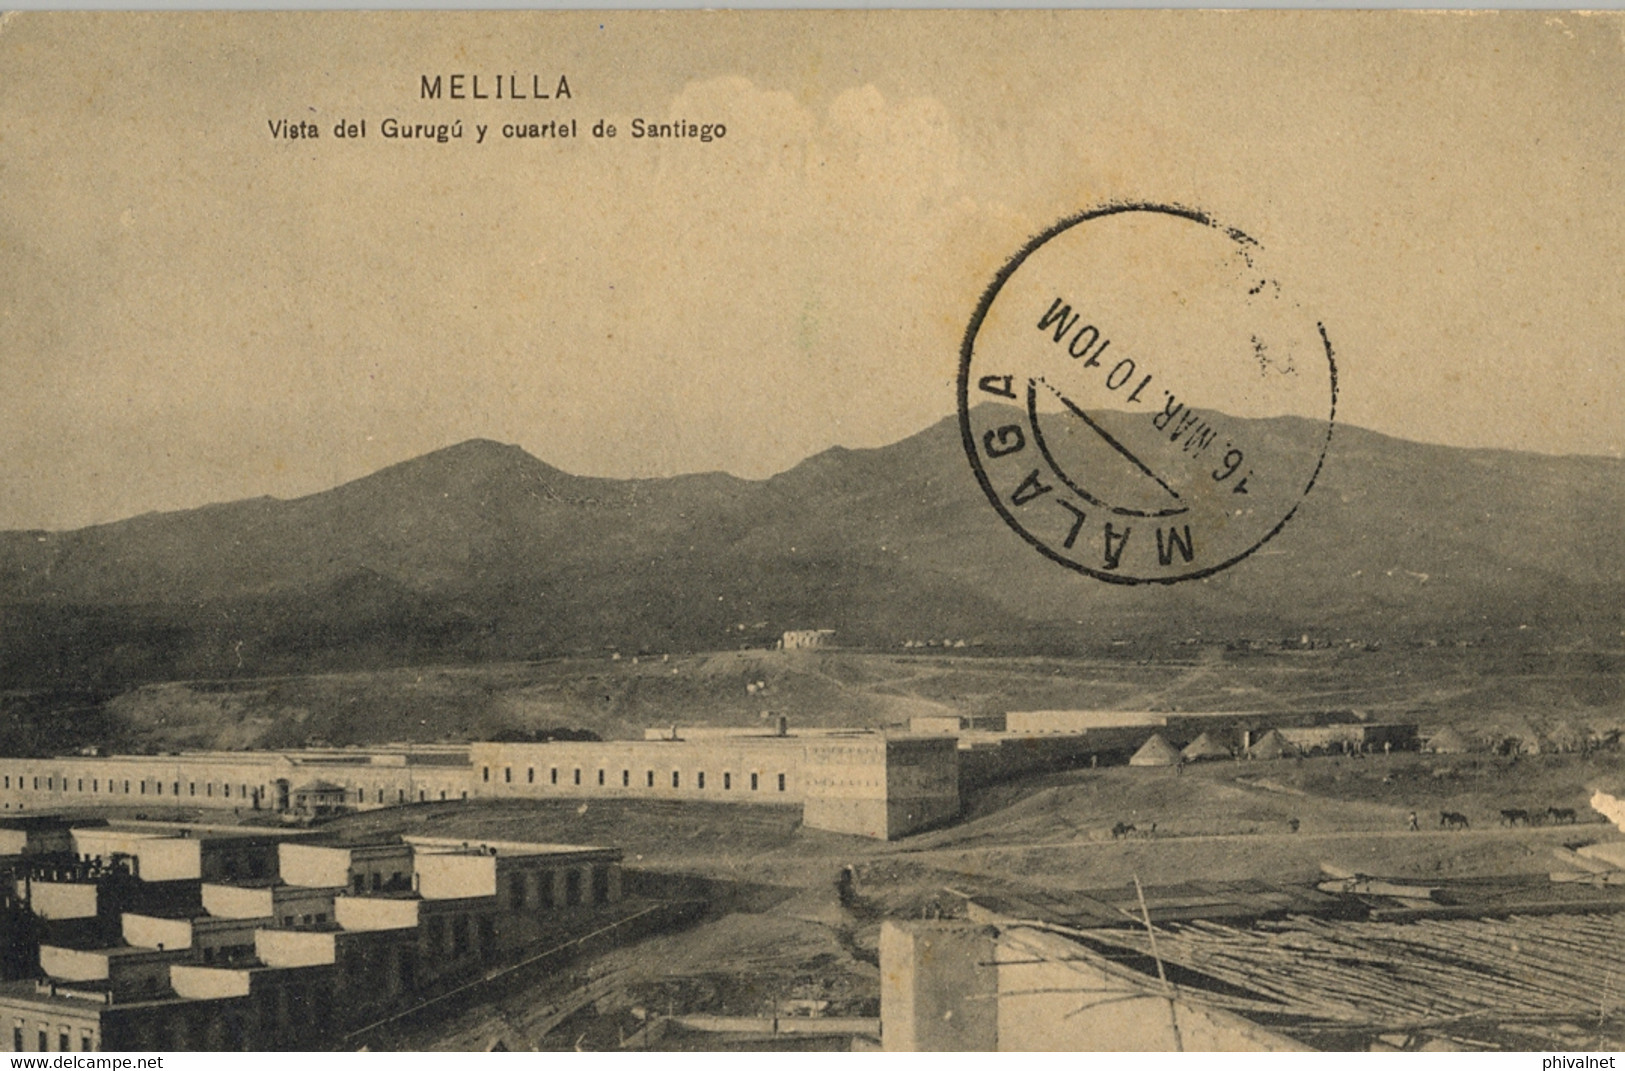 1910 , MELILLA , T.P. CIRCULADA A MÁLAGA , MARCA DE FRANQUICIA " REGIMIENTO DE INFANTERIA AFRICA " , LLEGADA - Lettres & Documents